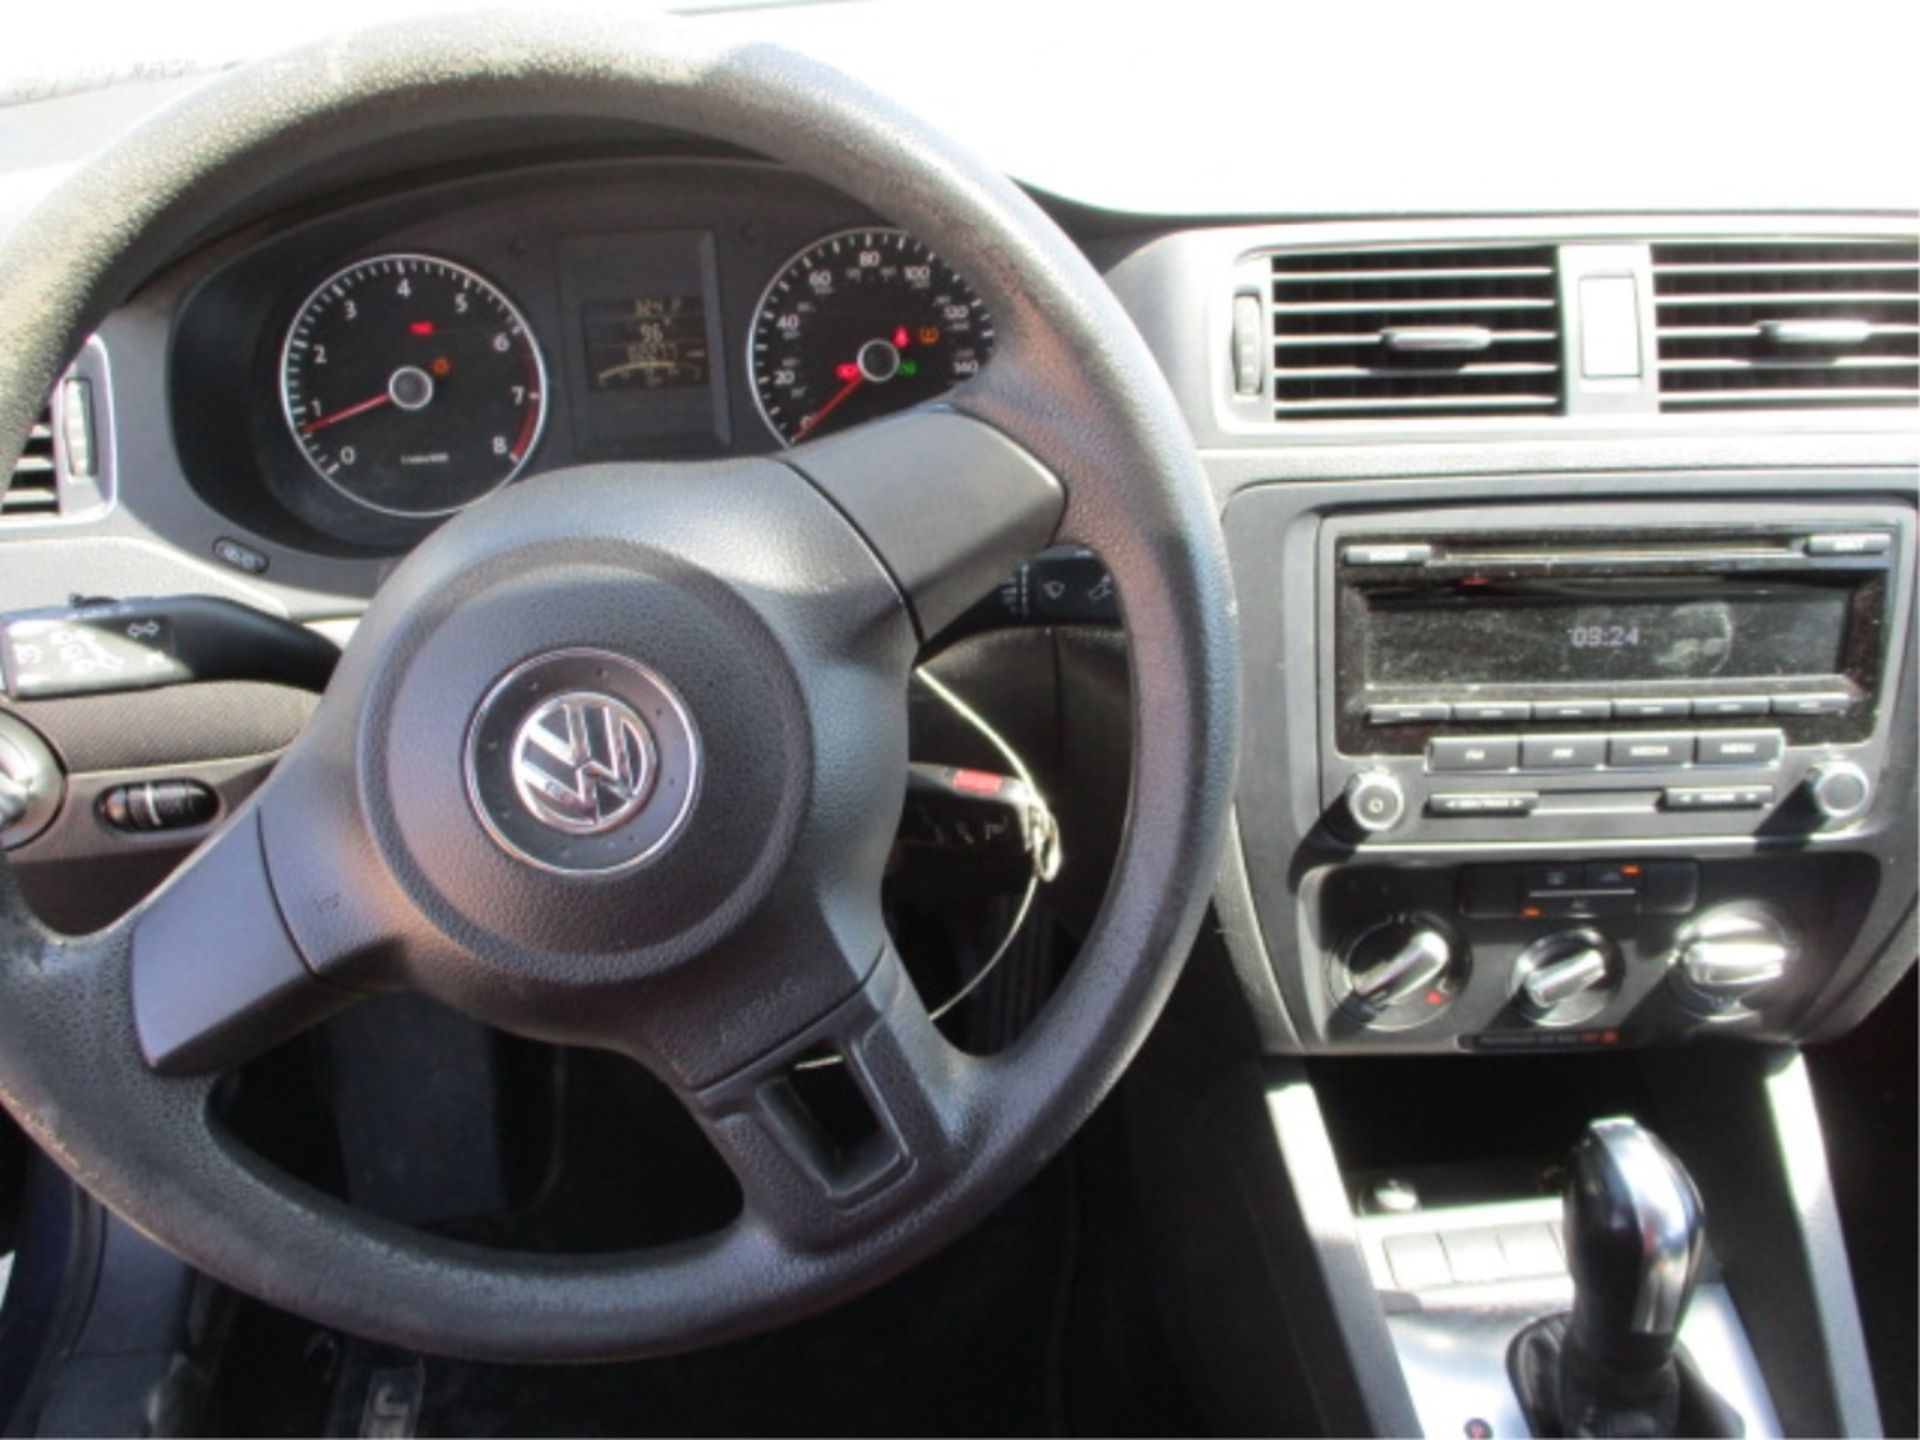 2012 Volkswagen Jetta Sedan, 2.5L Gas, Automatic, S/N: 3VWDP7AJ6CM345626, Mile/Hours - 82277 - Image 24 of 40